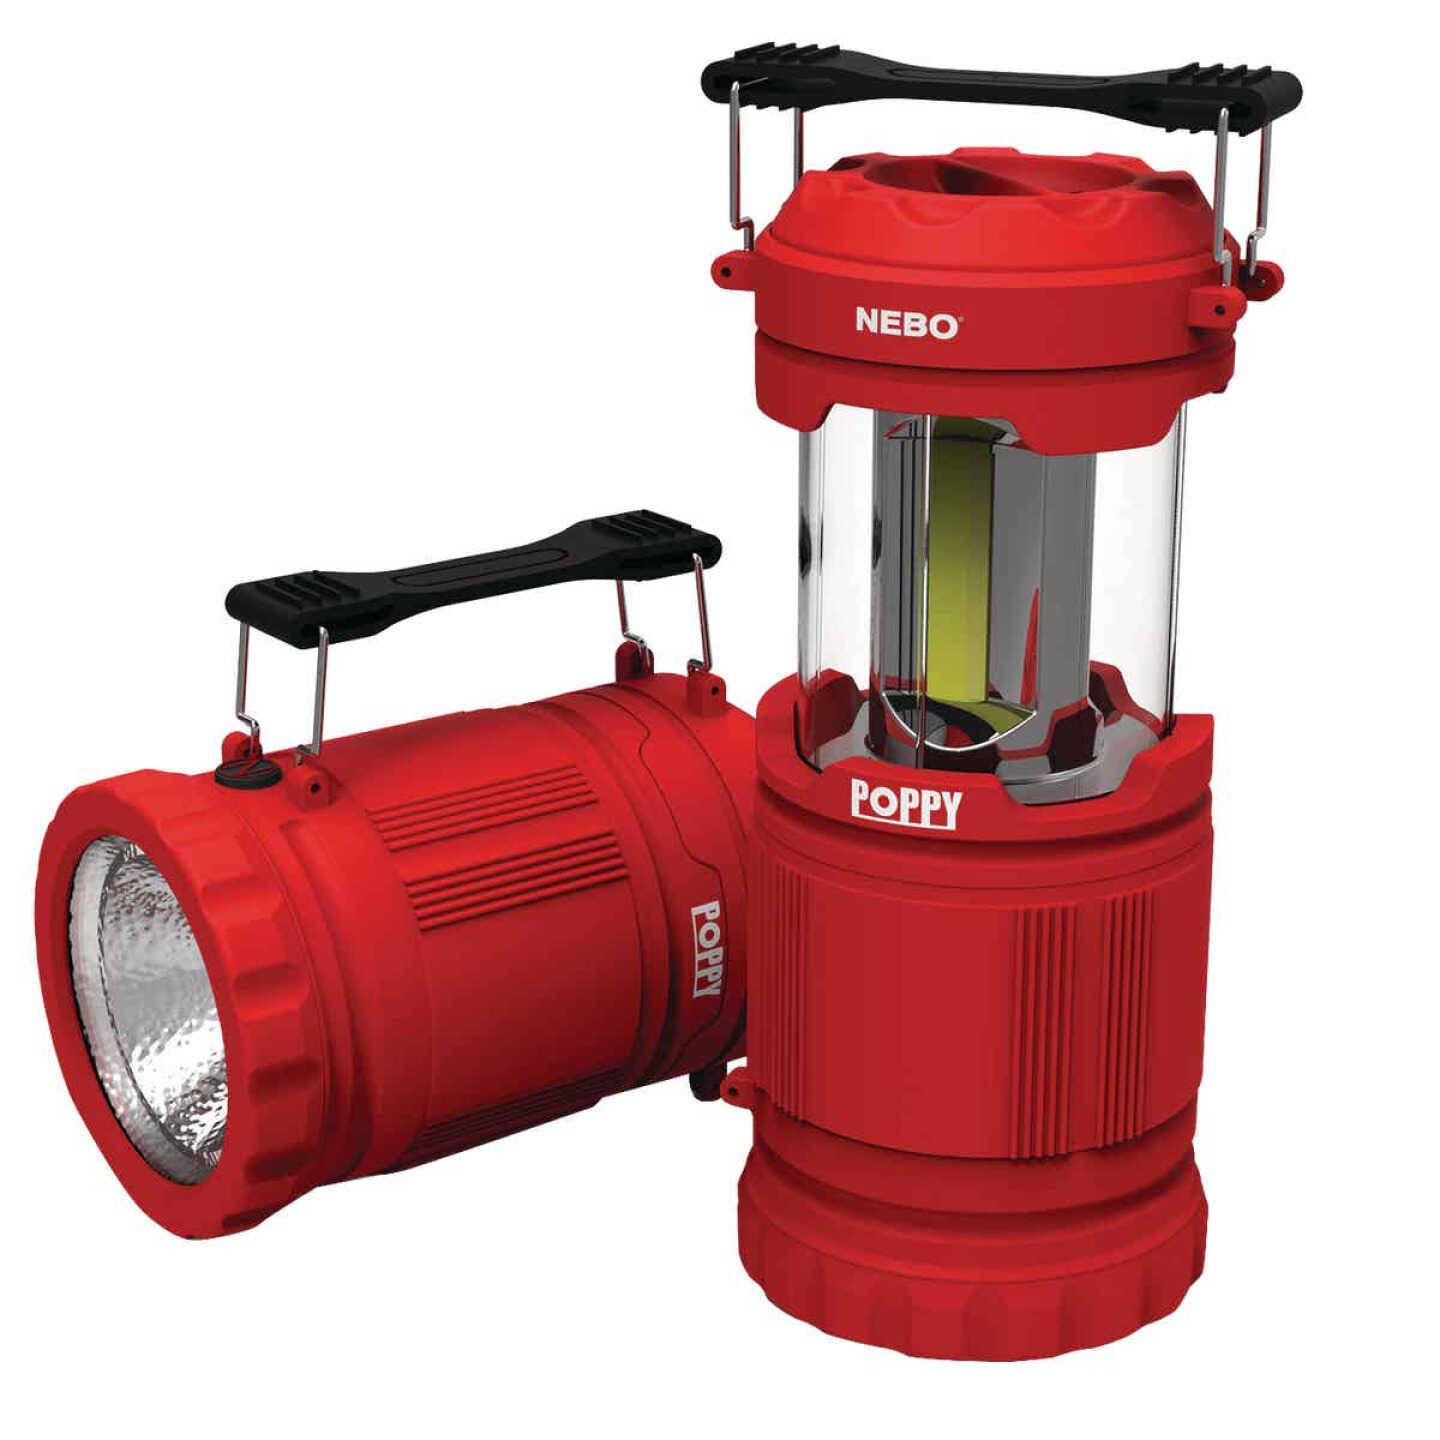 Nebo Poppy 300 Lm Red LED Pop Up Lantern and Spotlight